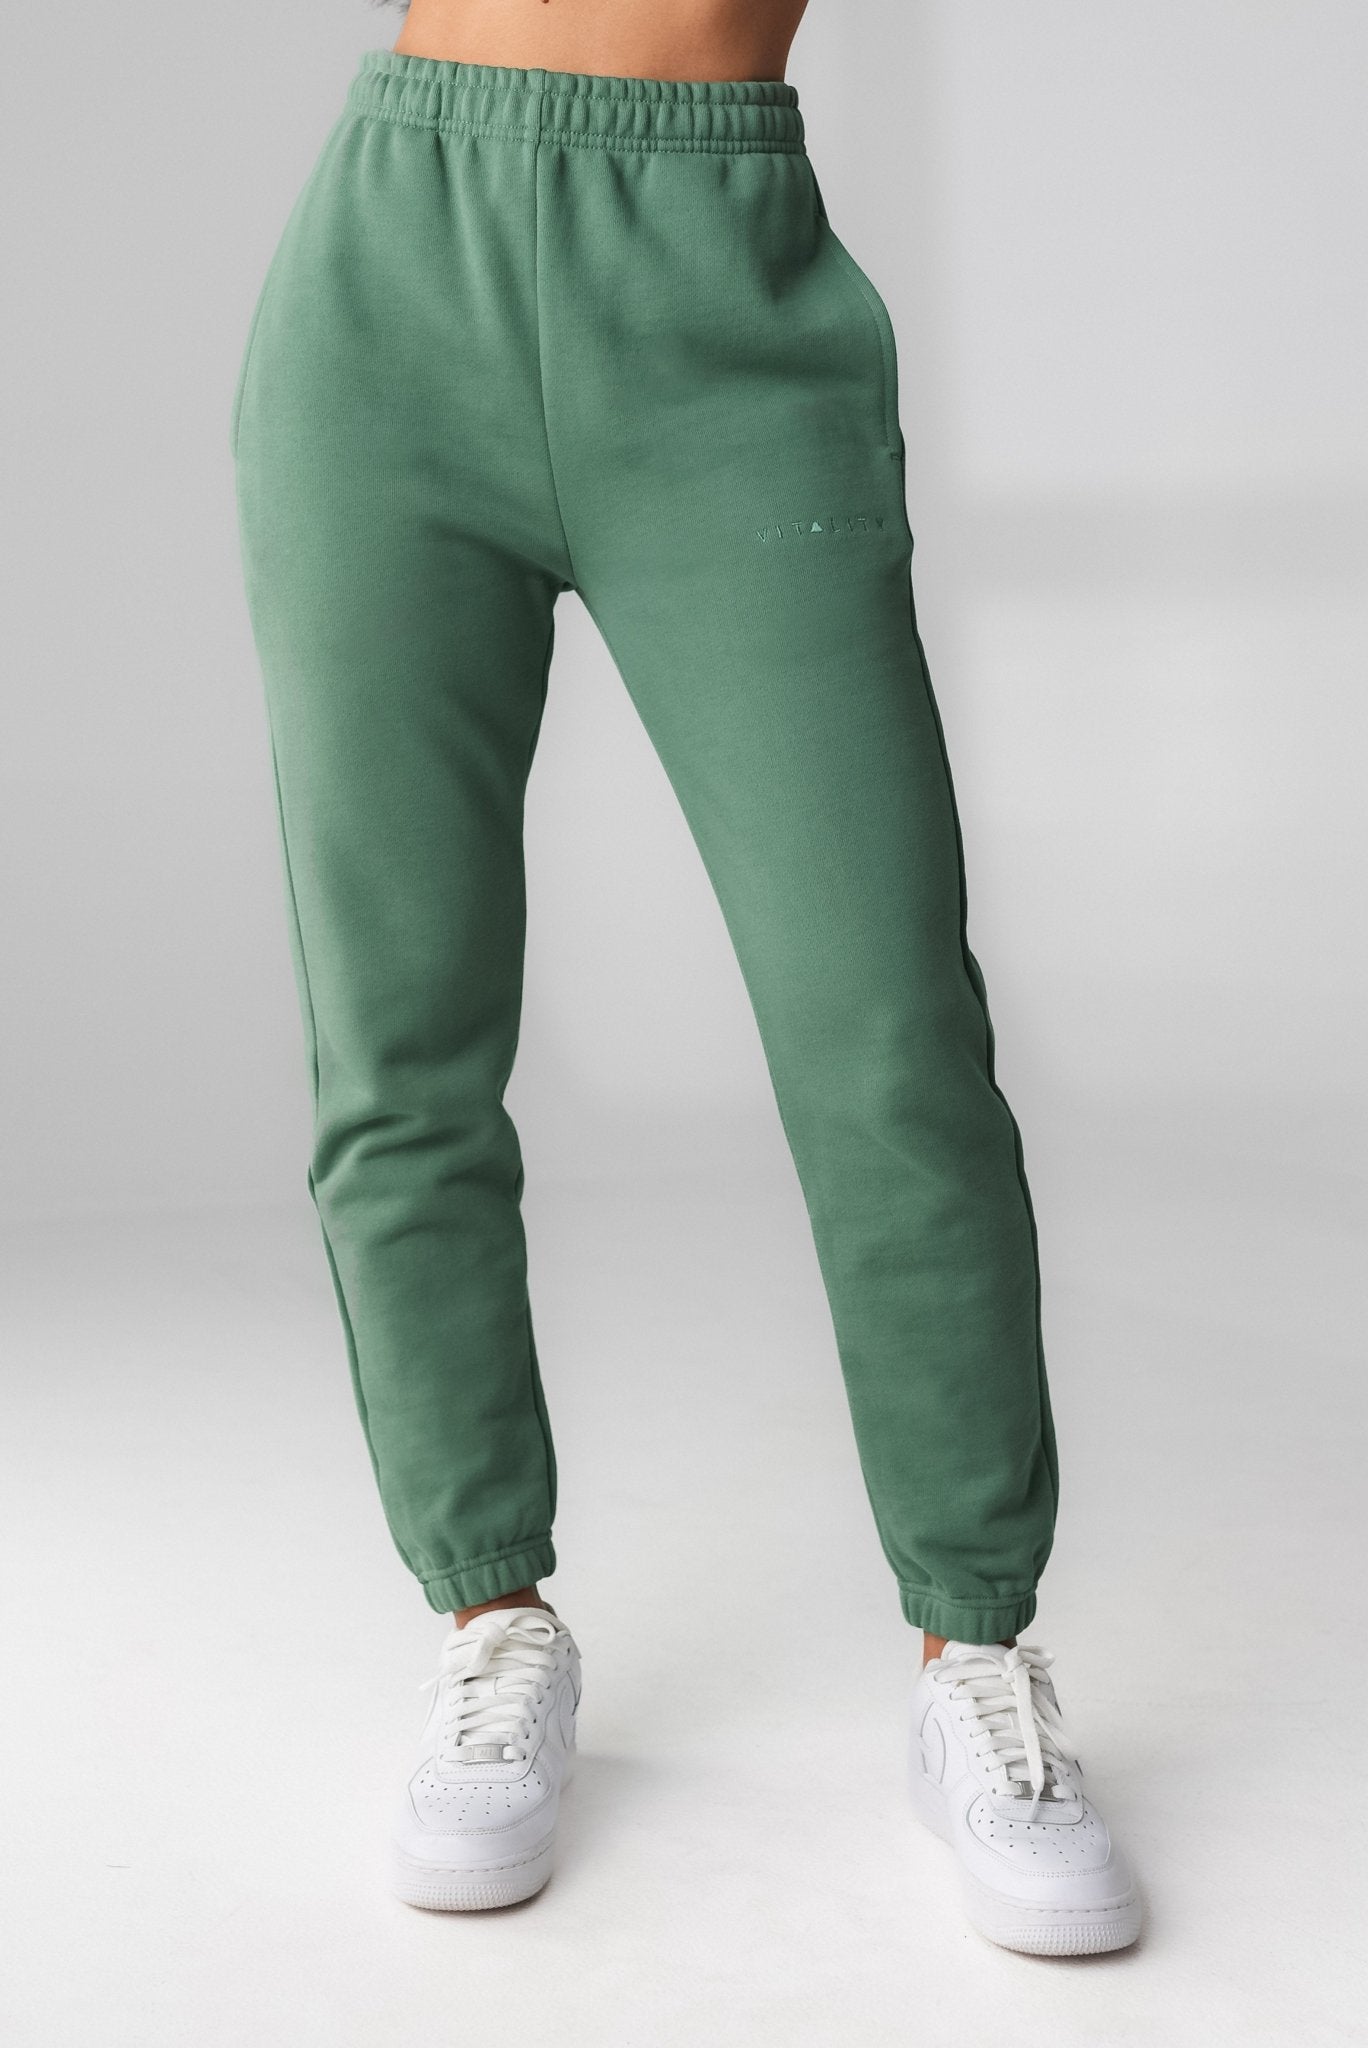 Chic Olive Green Pants - Jogger Pants - Casual Pants - Joggers - Lulus